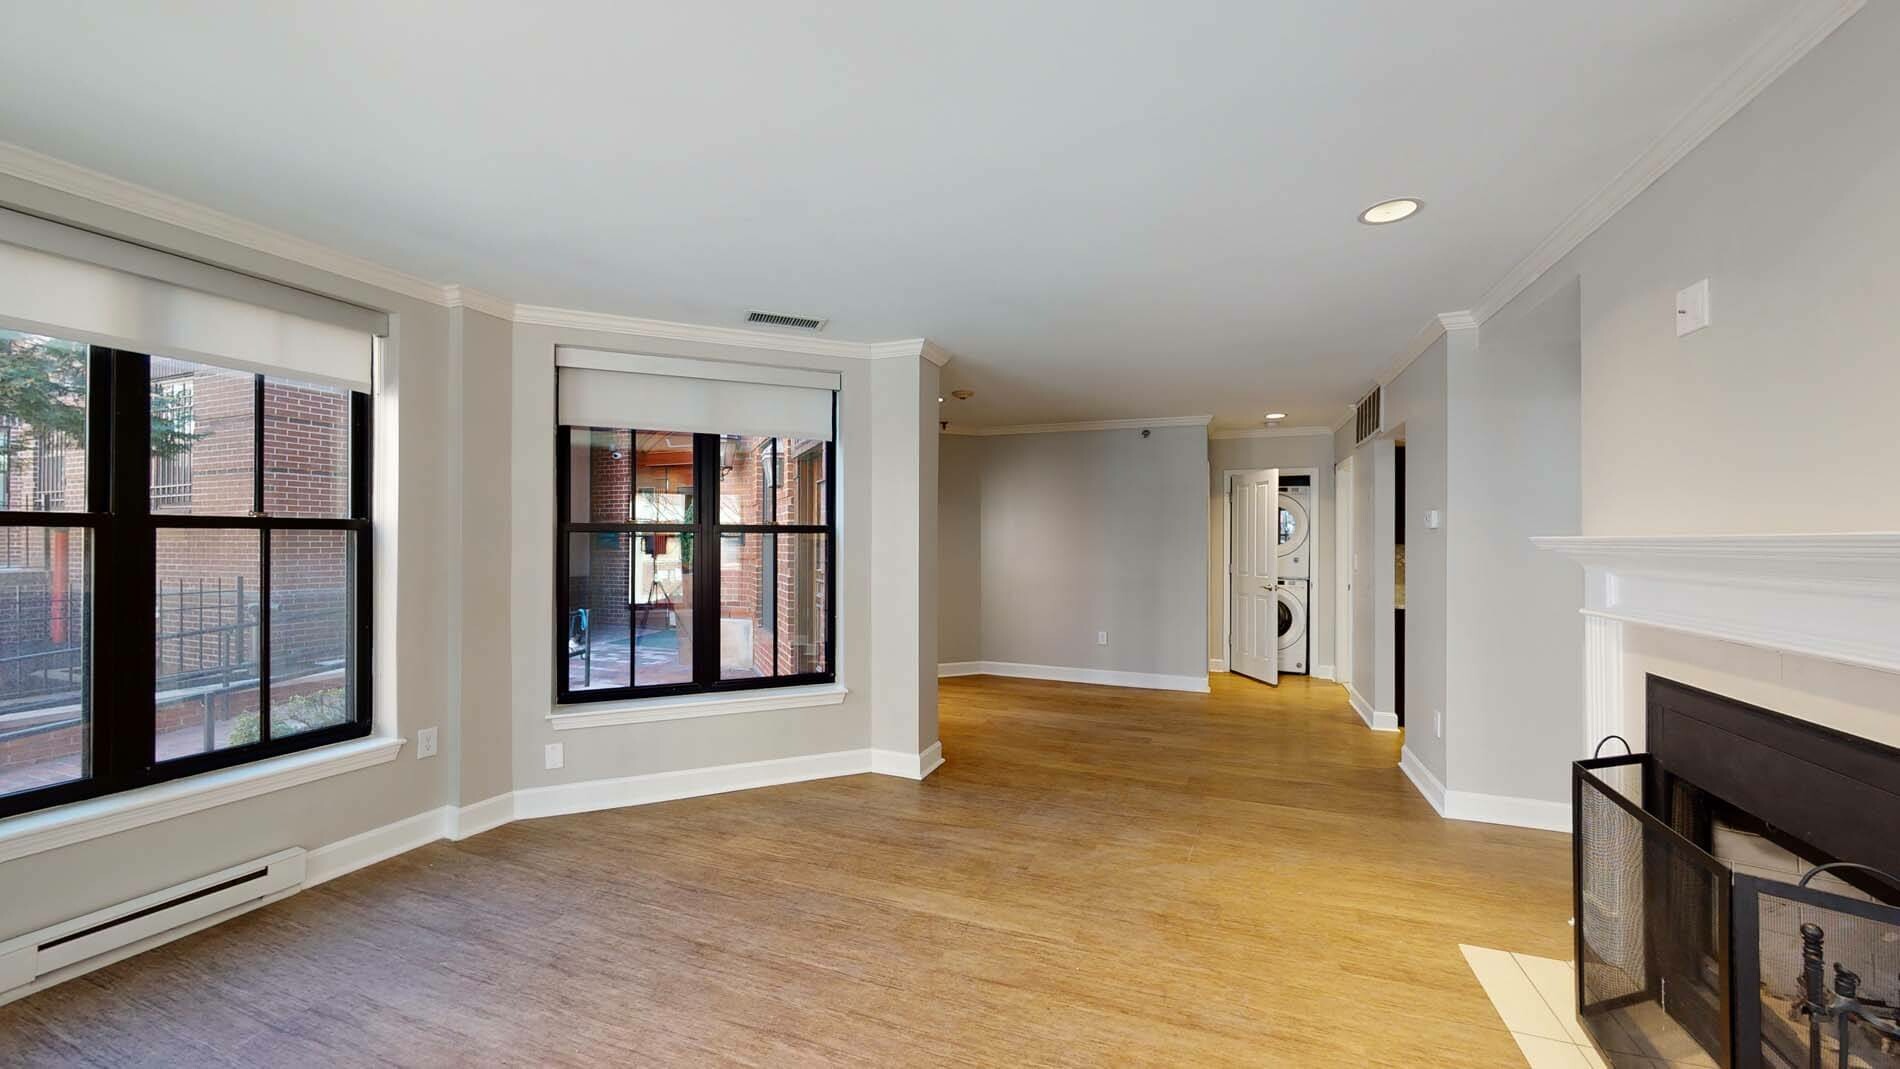 Photos of apartment on Harcourt St.,Boston MA 02116